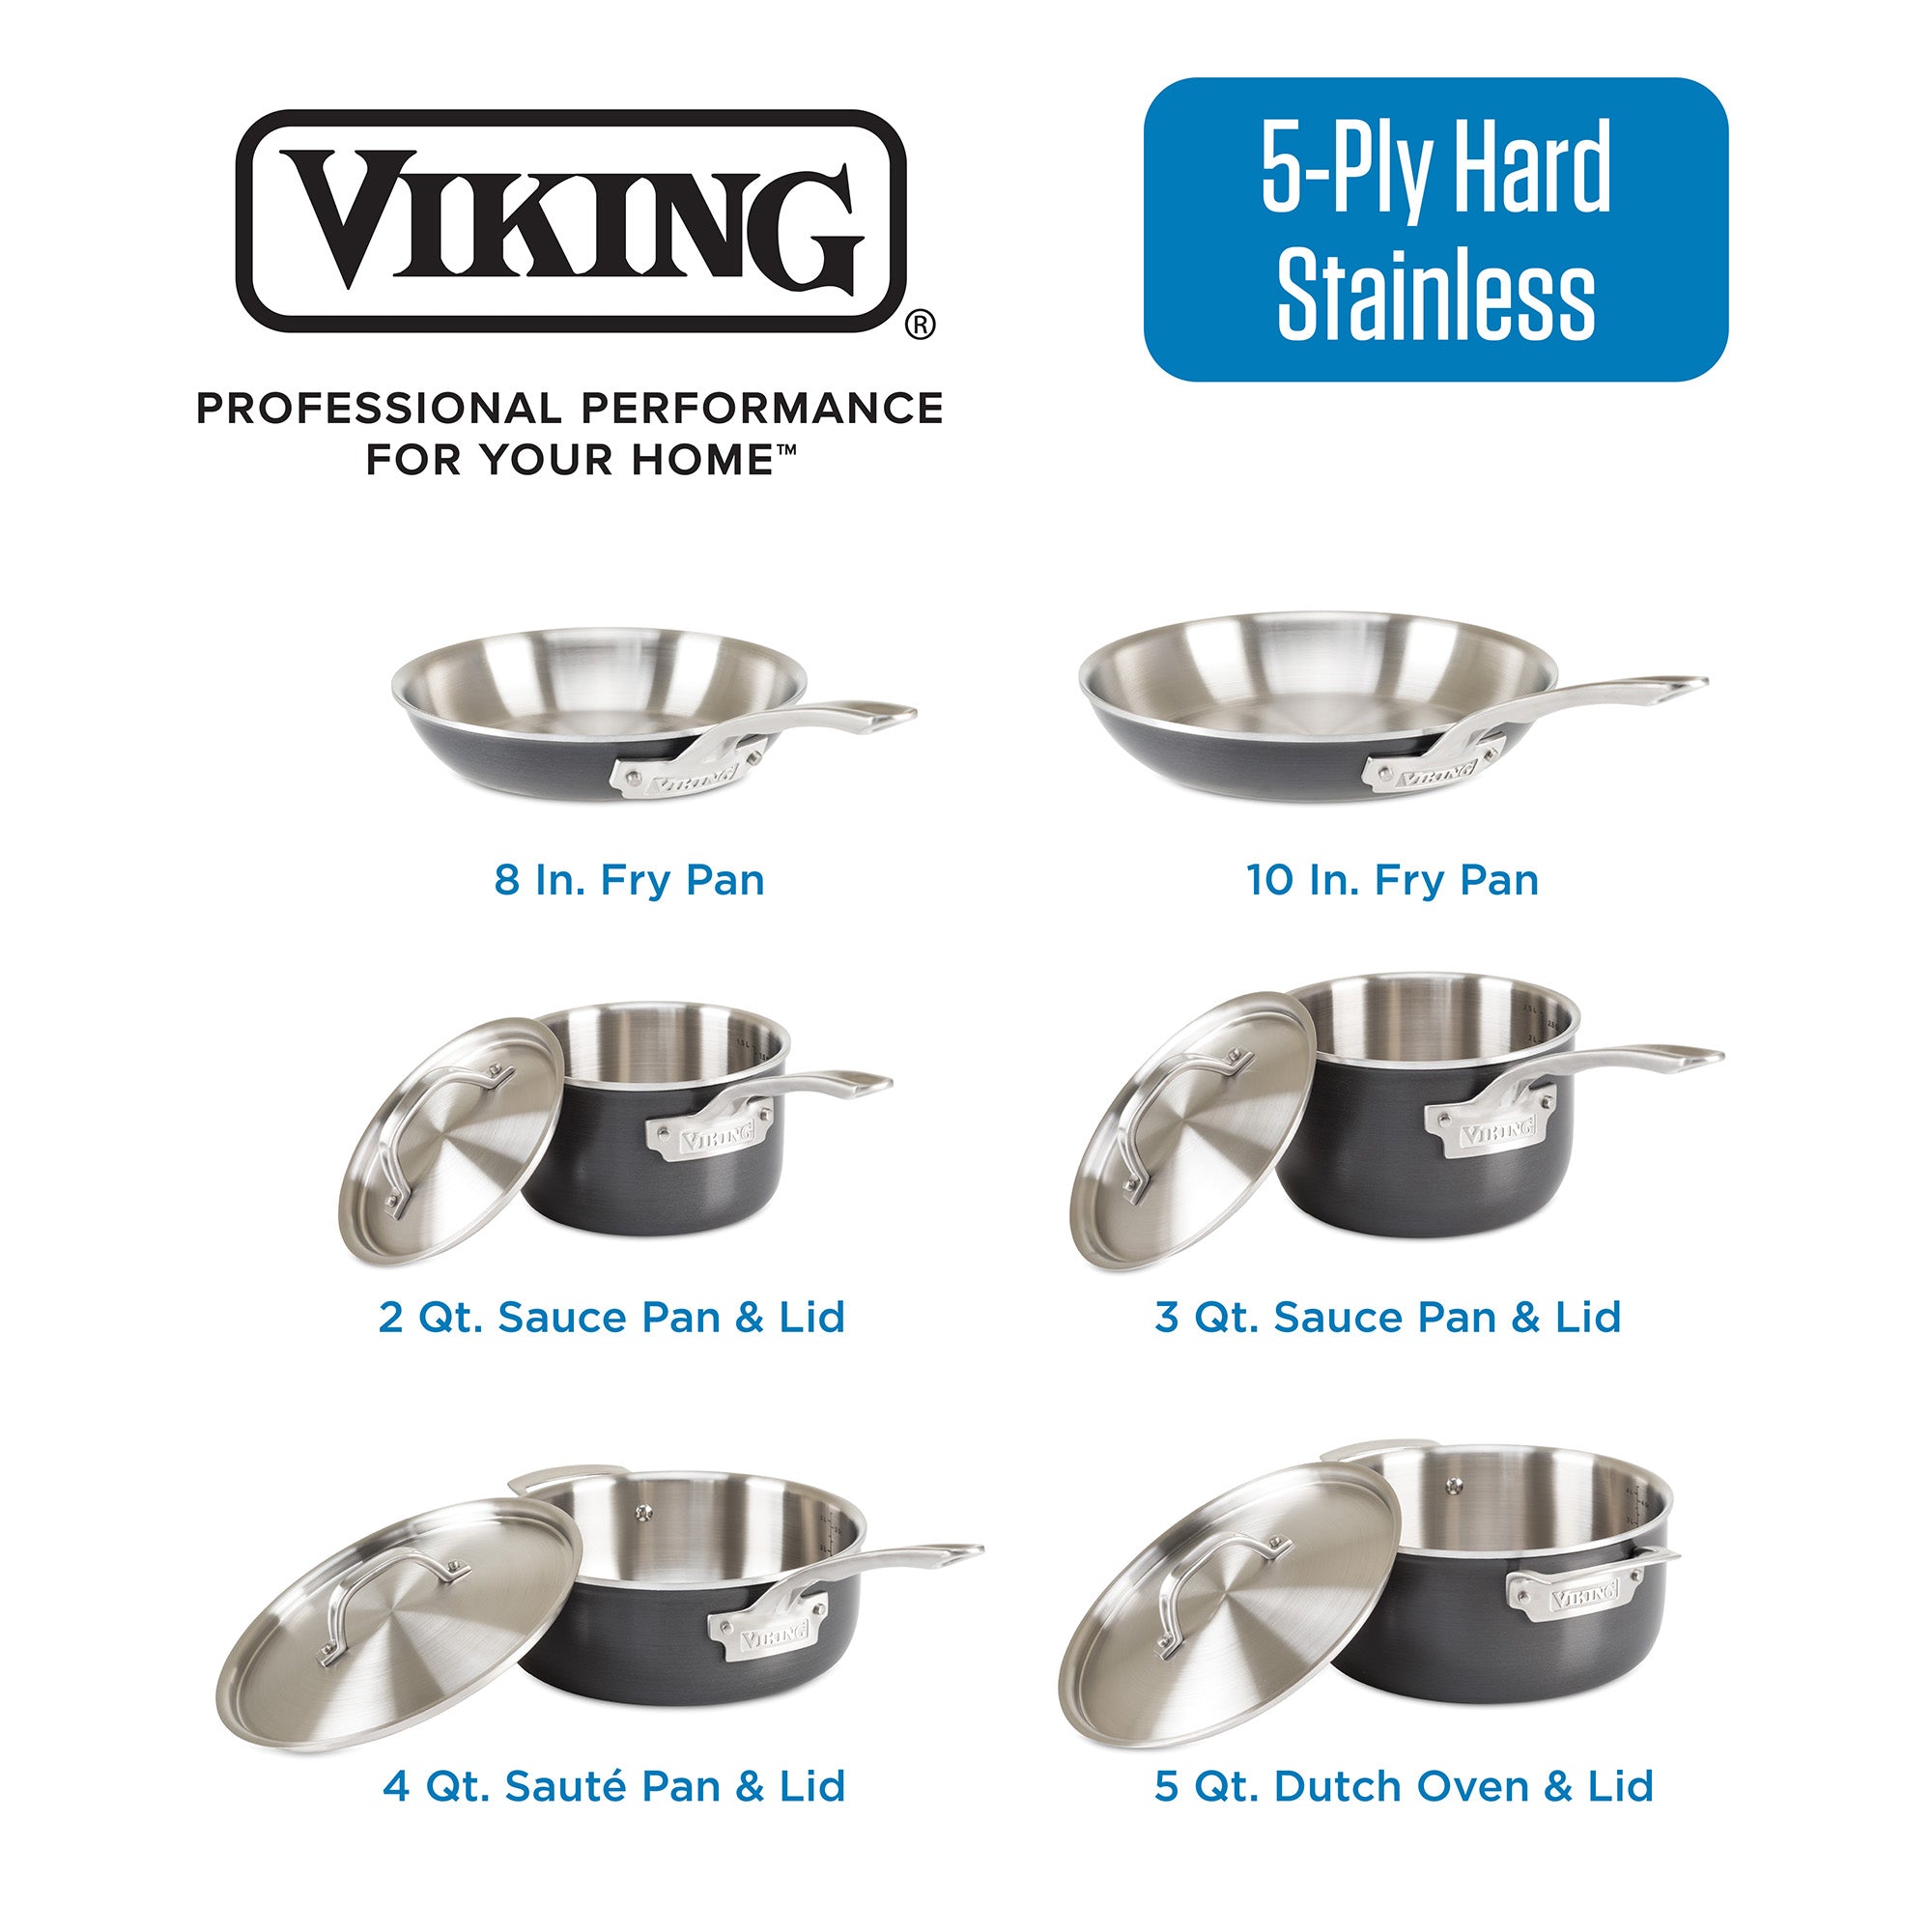 Viking Hard Anodized Nonstick 3 Quart Saucepan